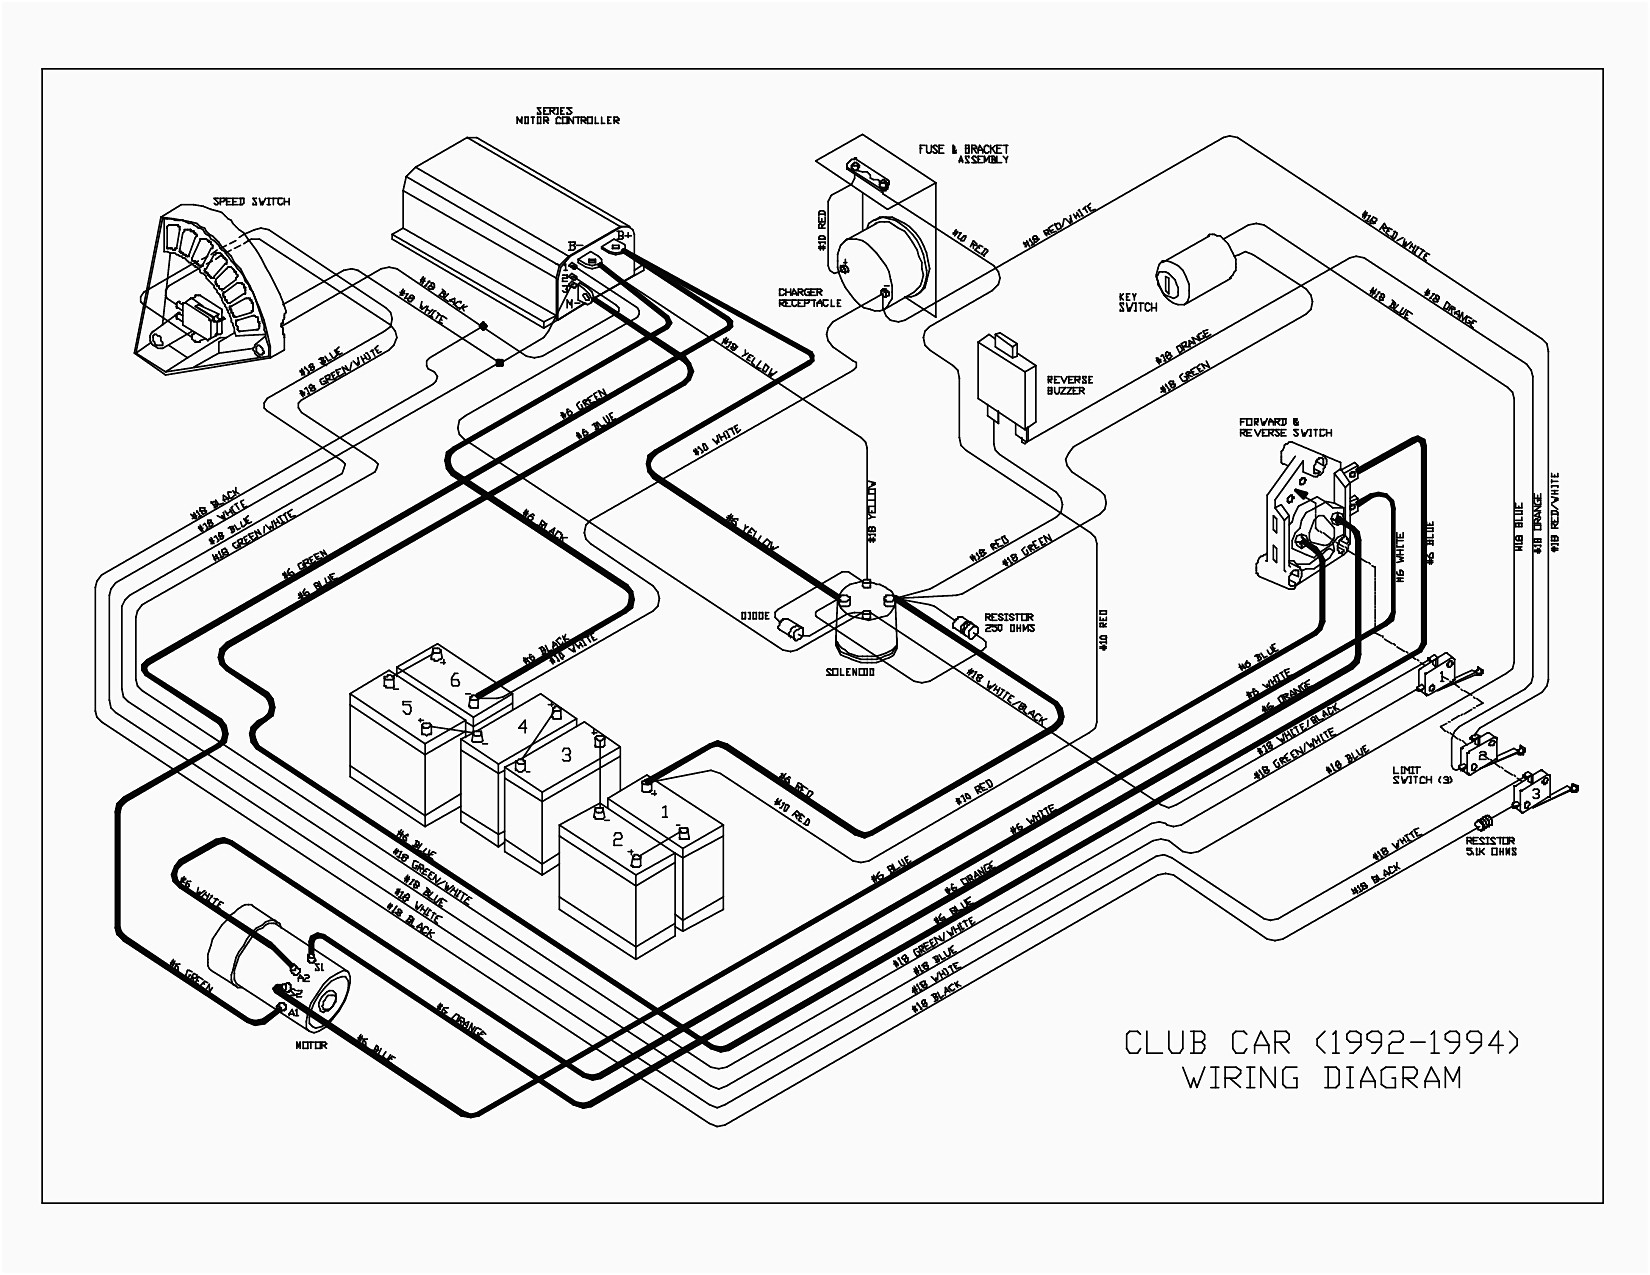 Club Car Ds Parts Diagram Ingersoll Rand Club Car Wiring Diagram In Luxury Parts 43 Inside Of Club Car Ds Parts Diagram